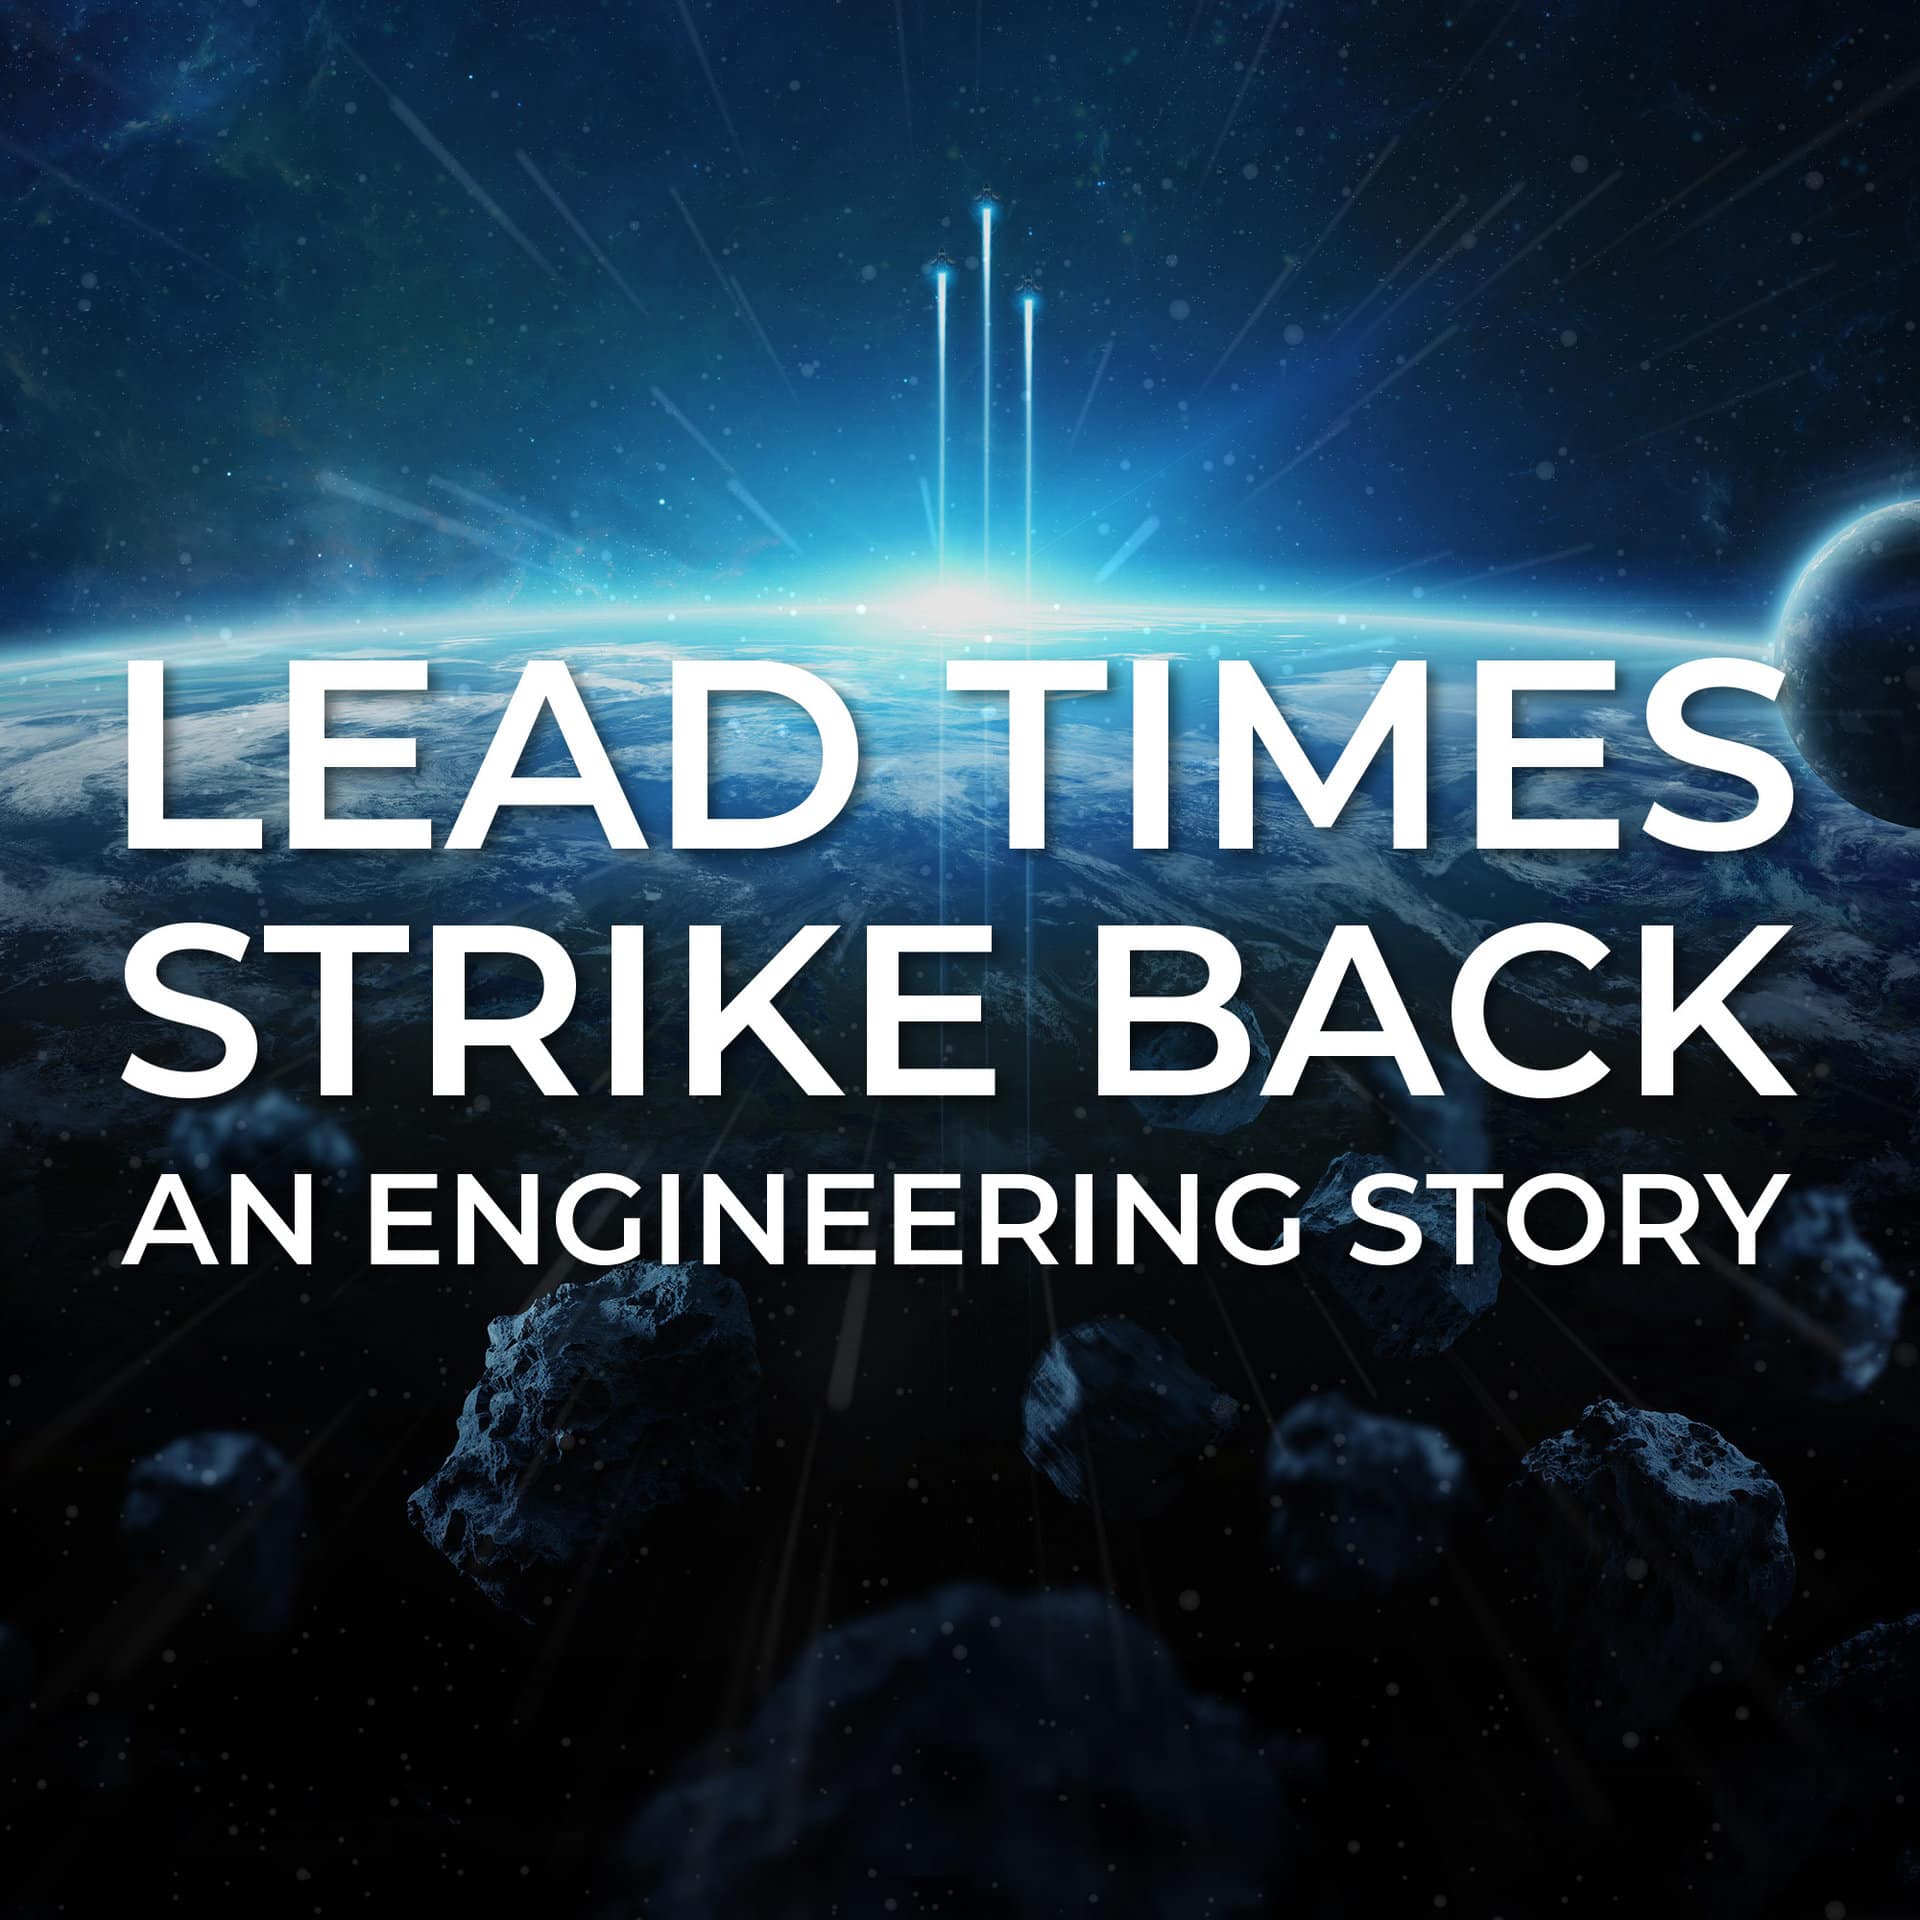 Lead Times Strike Back – An Engineering Story